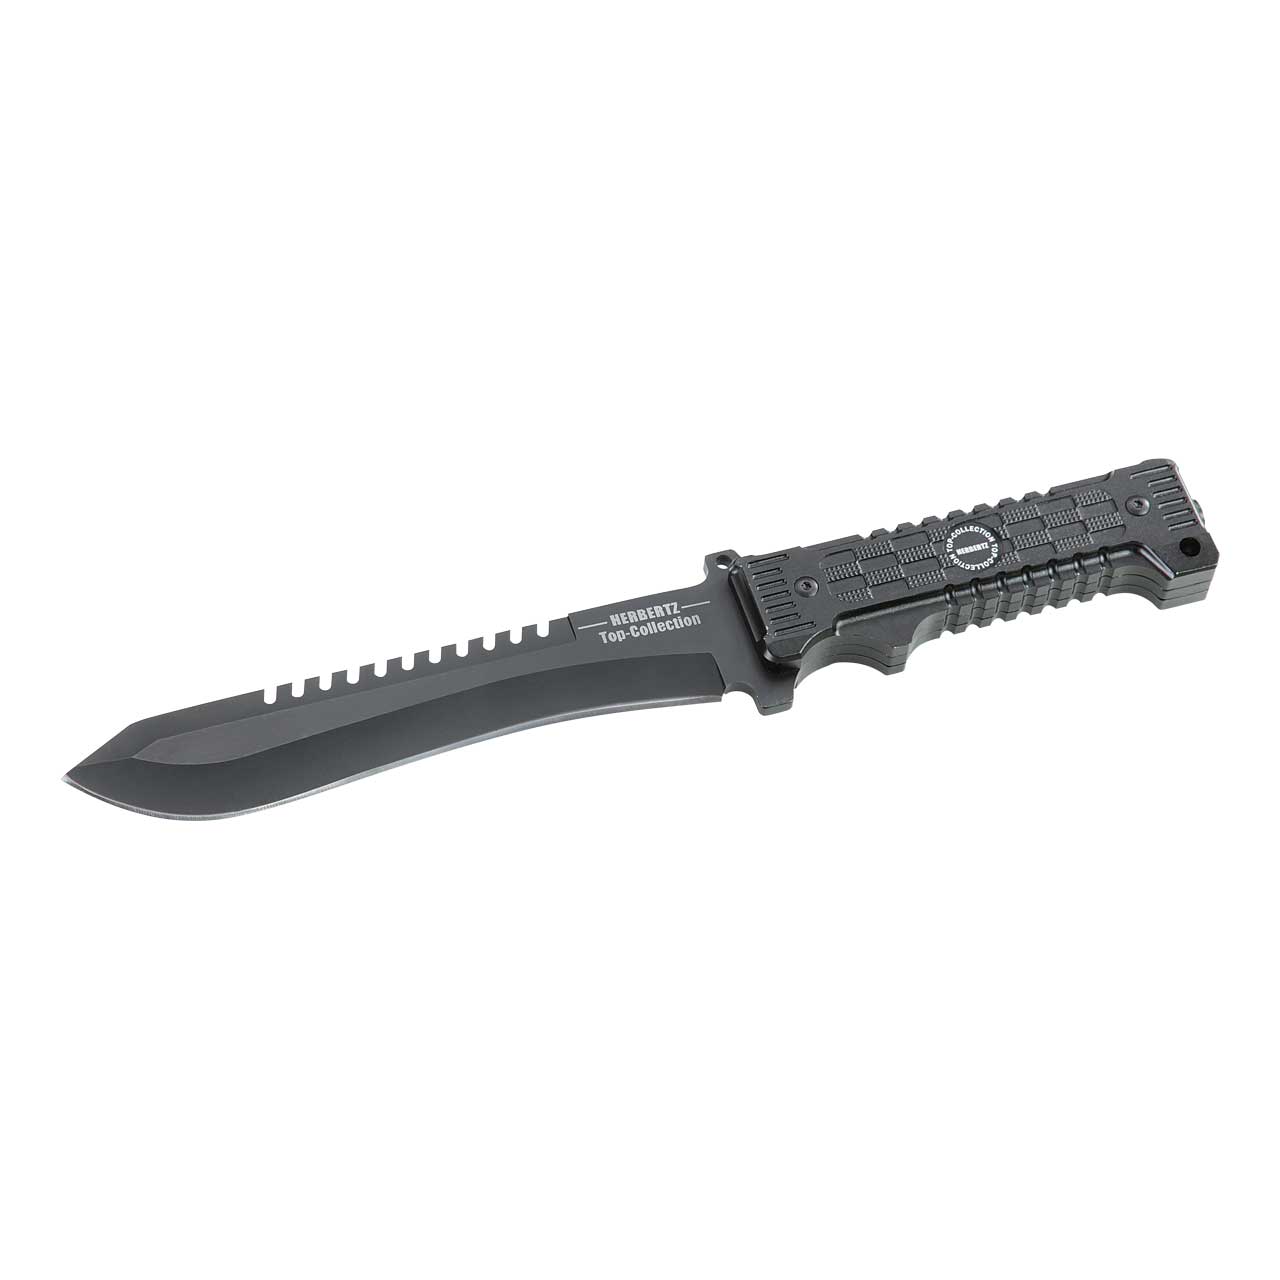 HERBERTZ Top-Collection Survival-Messer, Stahl 420, schwarz, integrierte Rückensäge, Aluminium-Grif